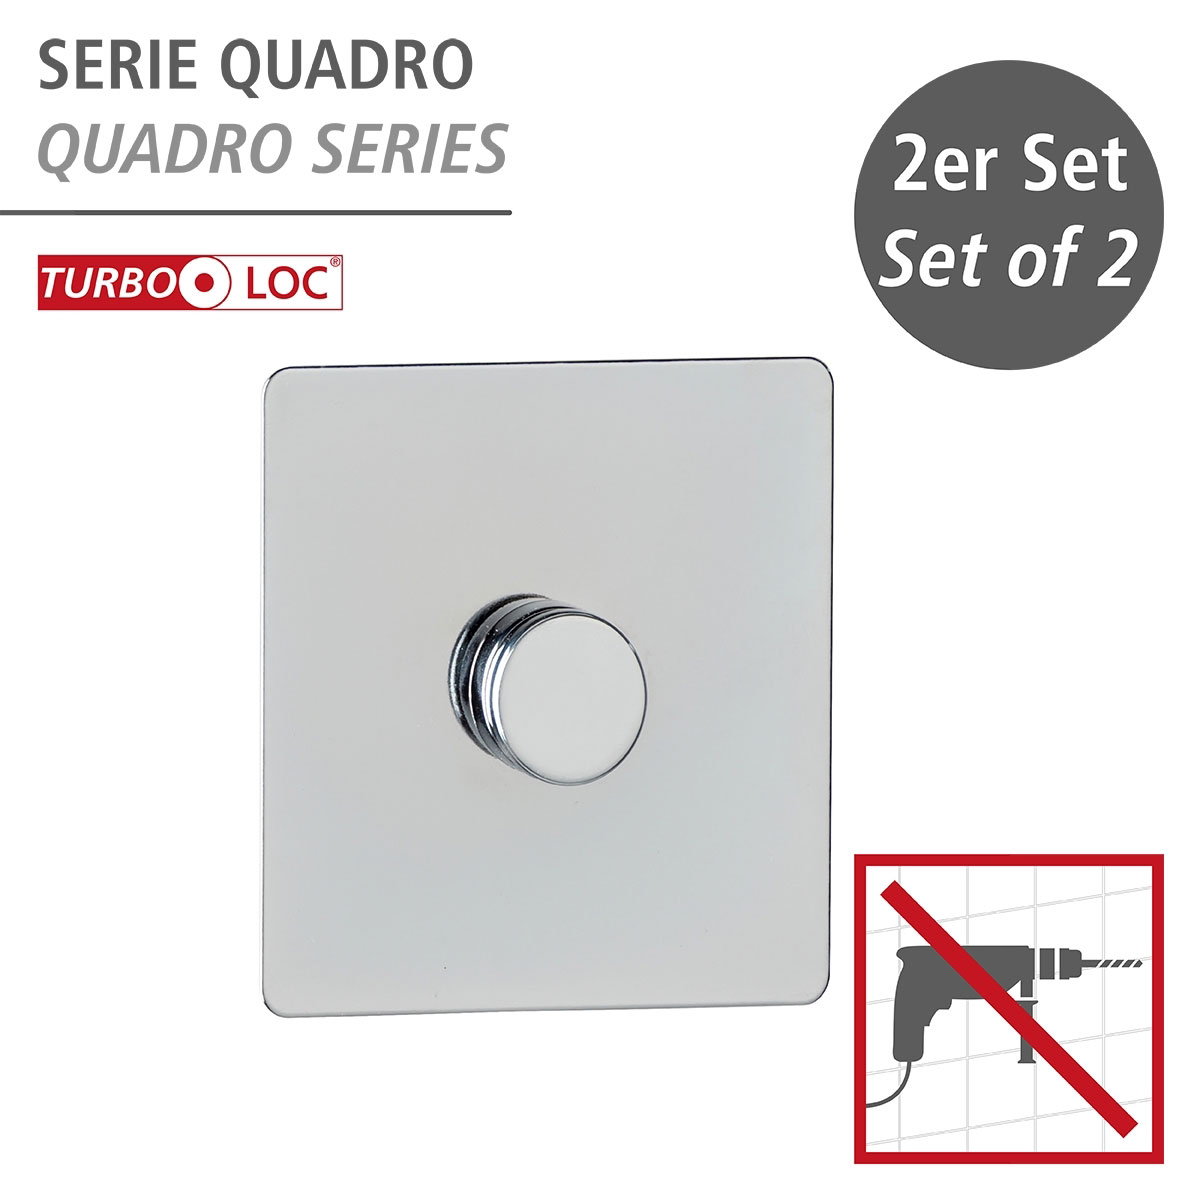 Wenko Edelstahl Adapter Uno Quadro 2er Set Befestigen ohne bohren Turbo-Loc  | 503694